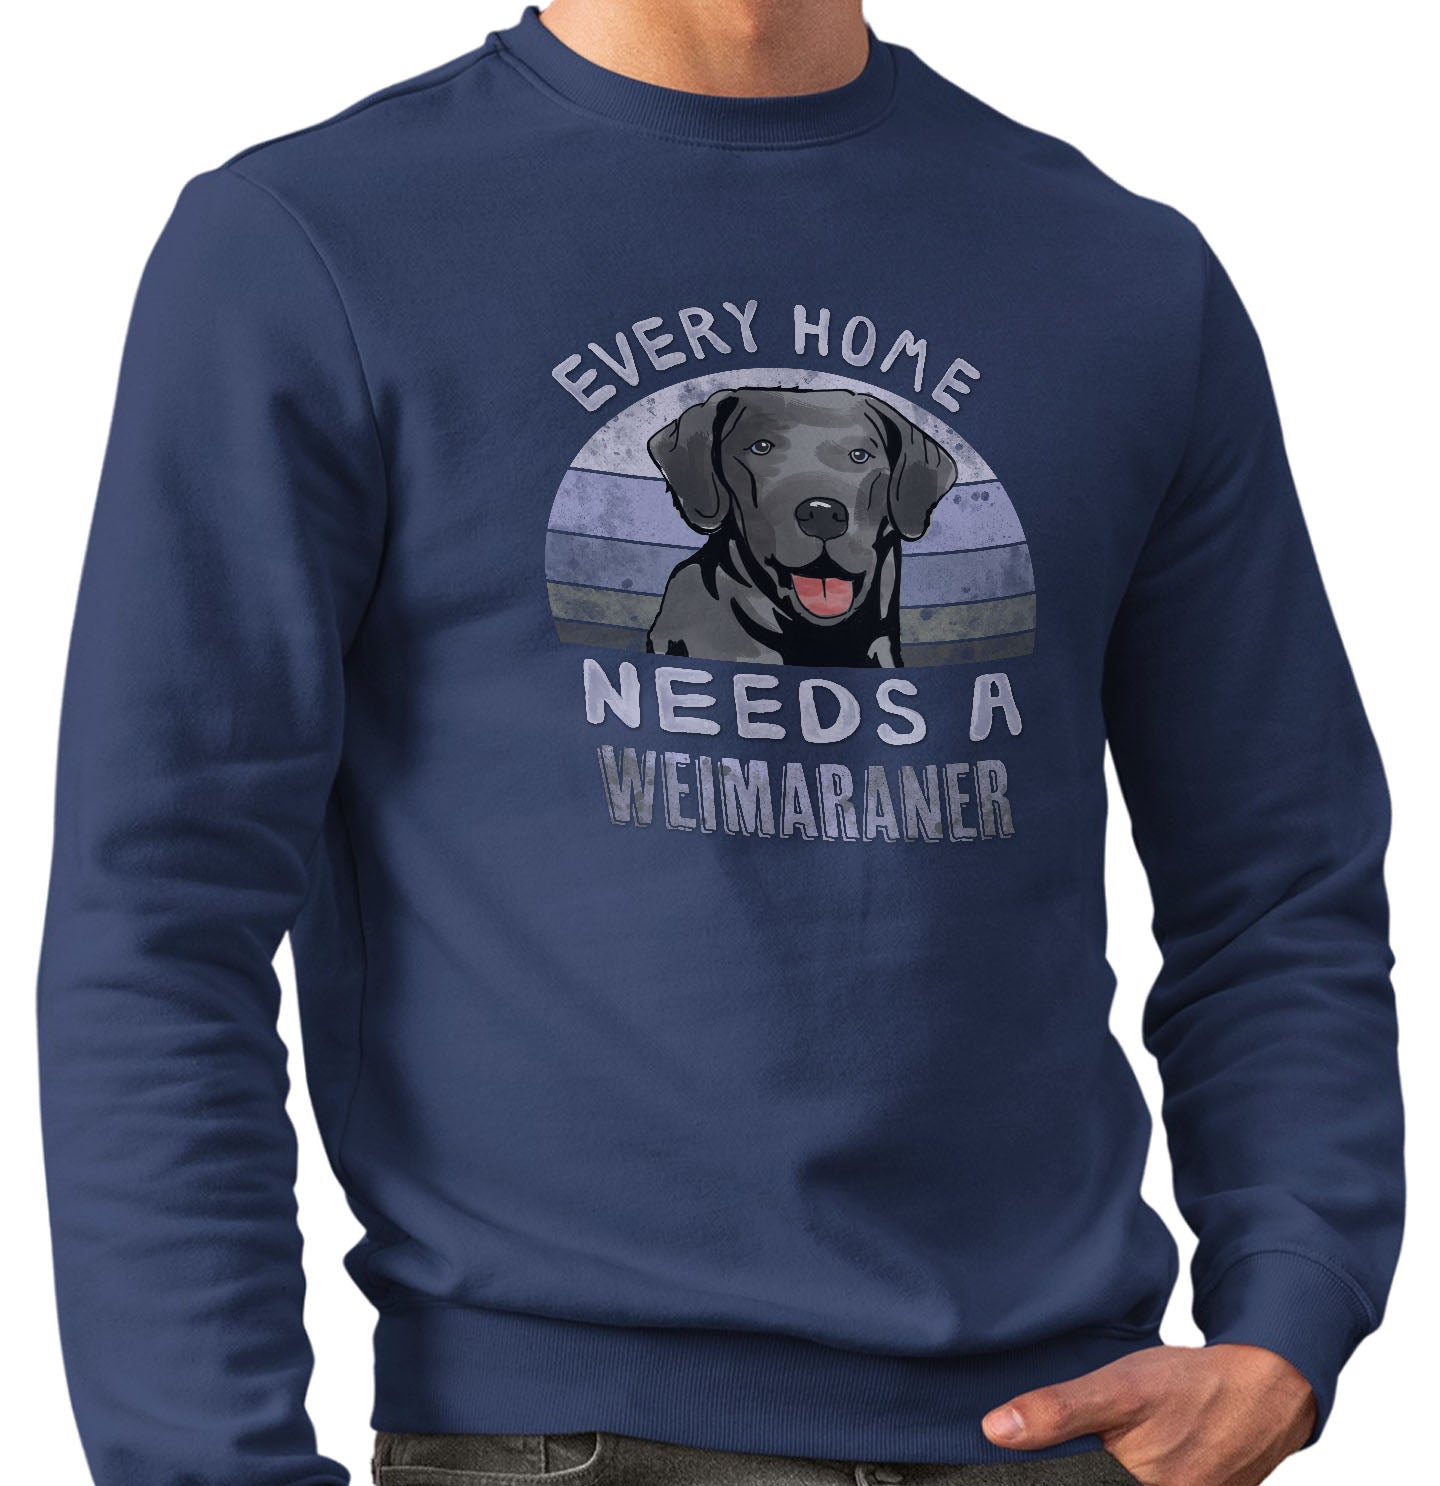 Every Home Needs a Weimaraner - Adult Unisex Crewneck Sweatshirt